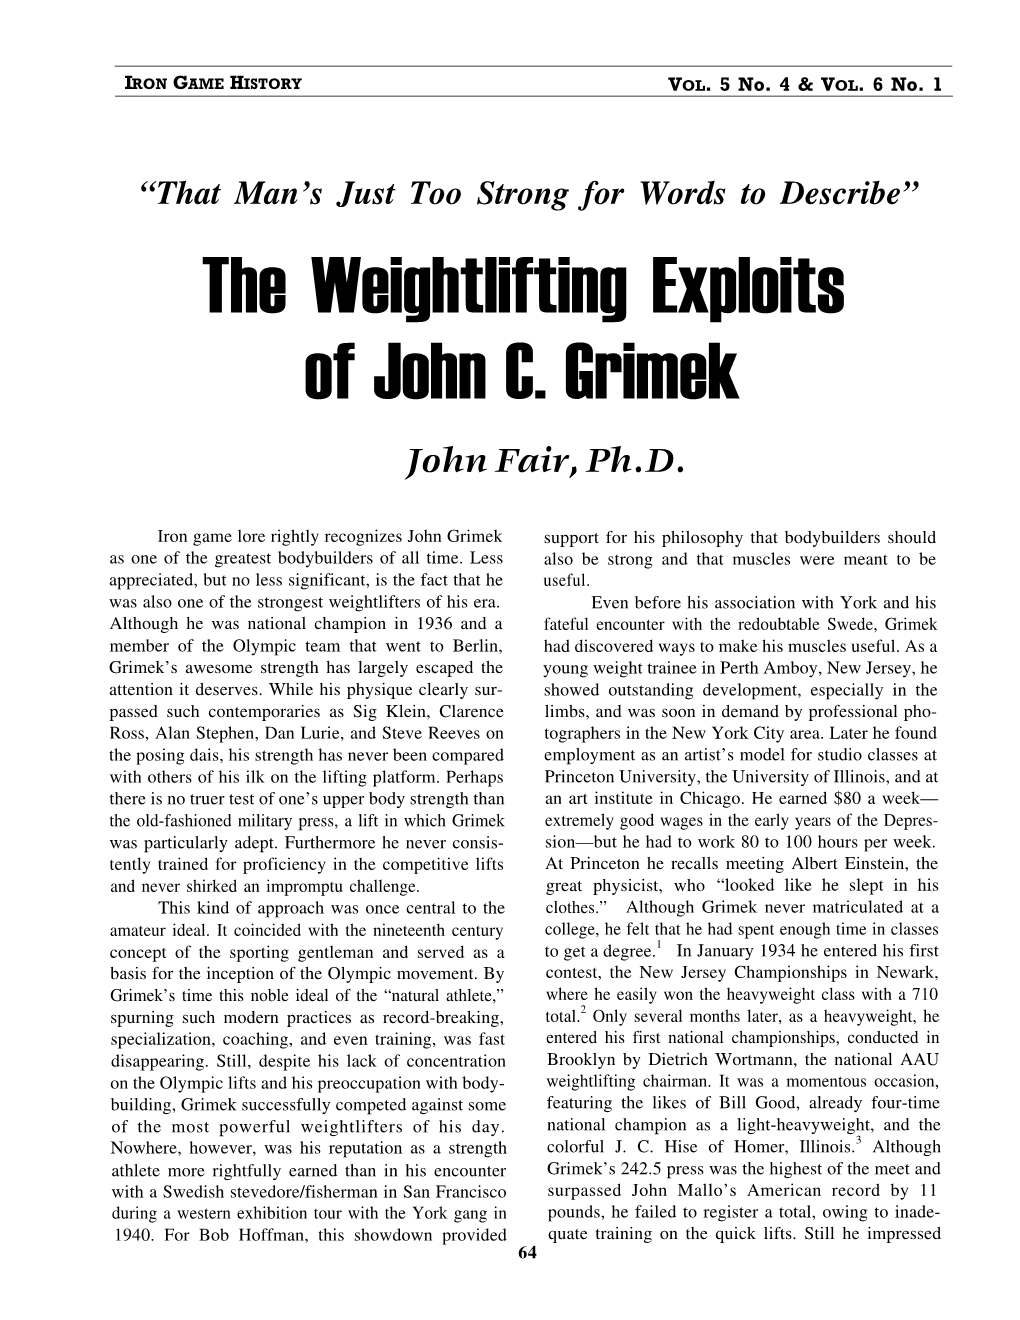 The Weightlifting Exploits of John C. Grimek John Fair, Ph.D